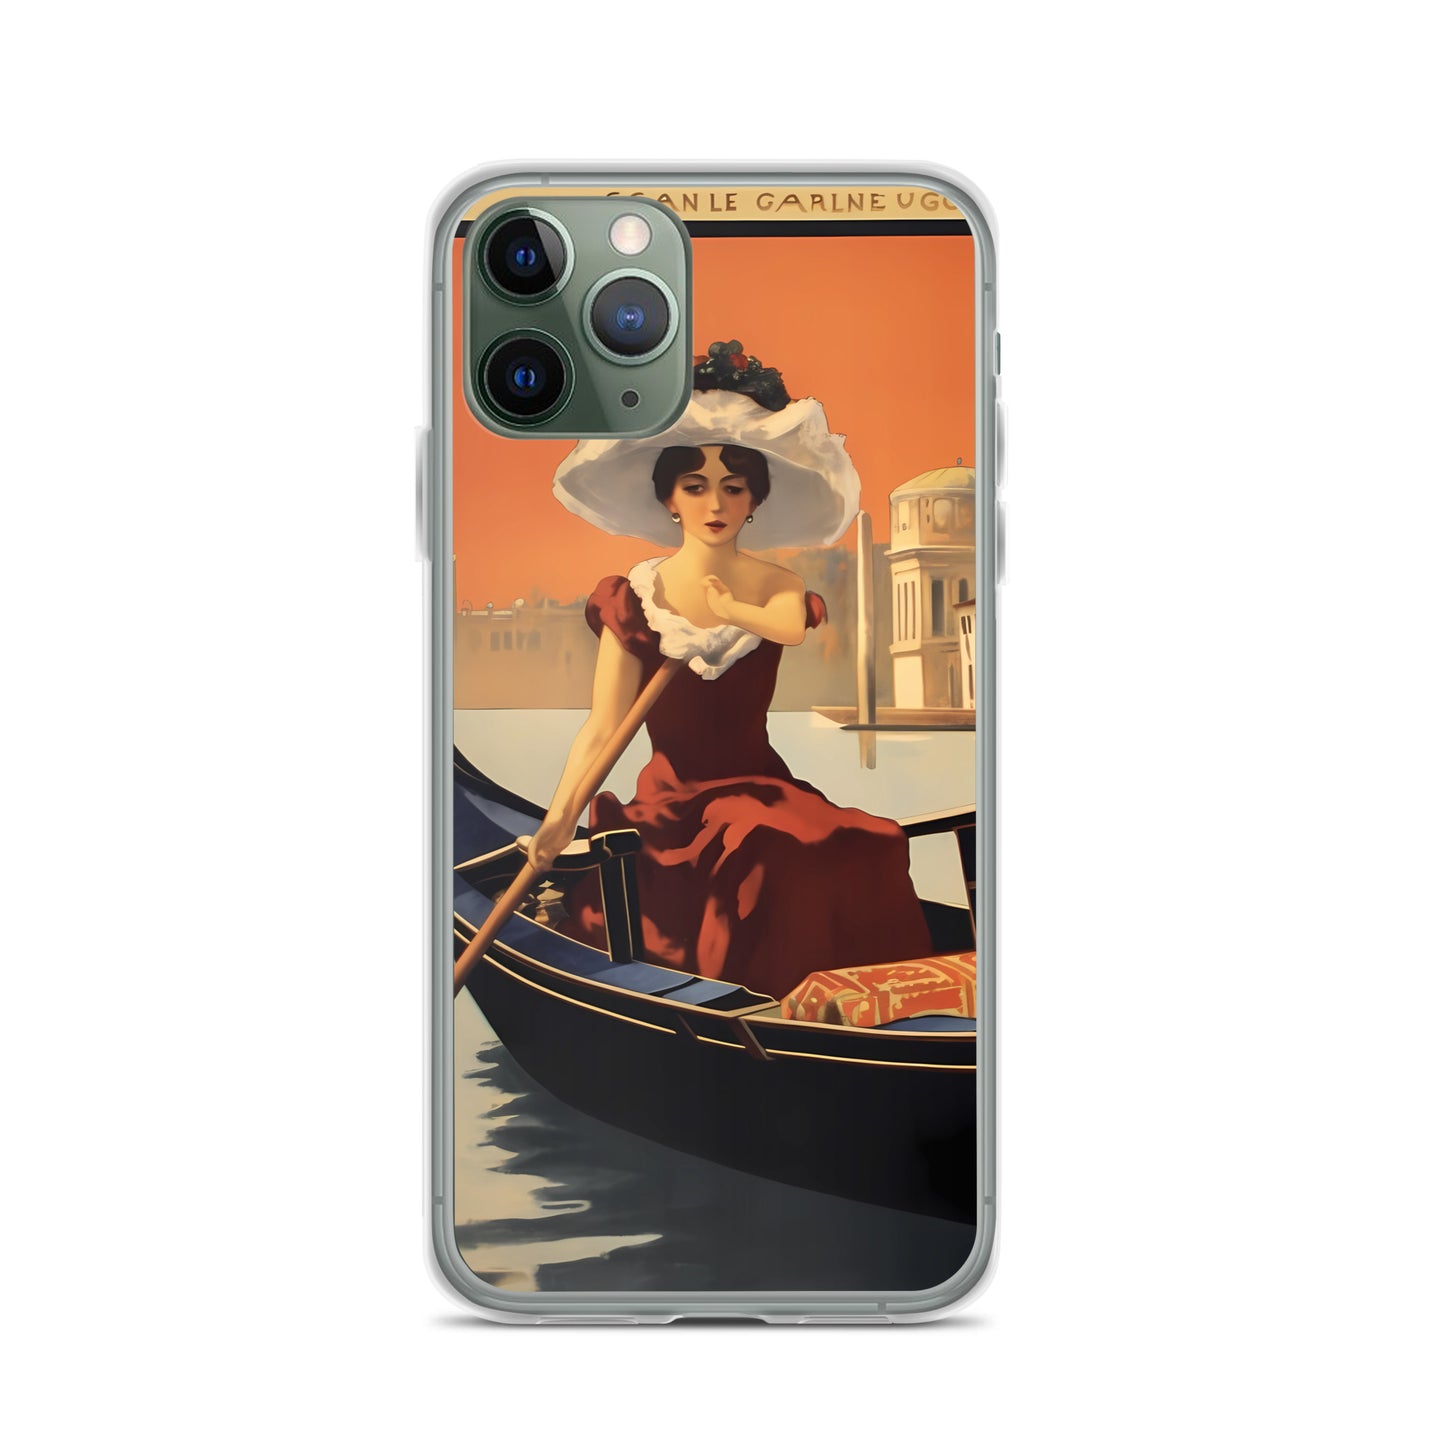 iPhone Case - Vintage Adverts - Gondola